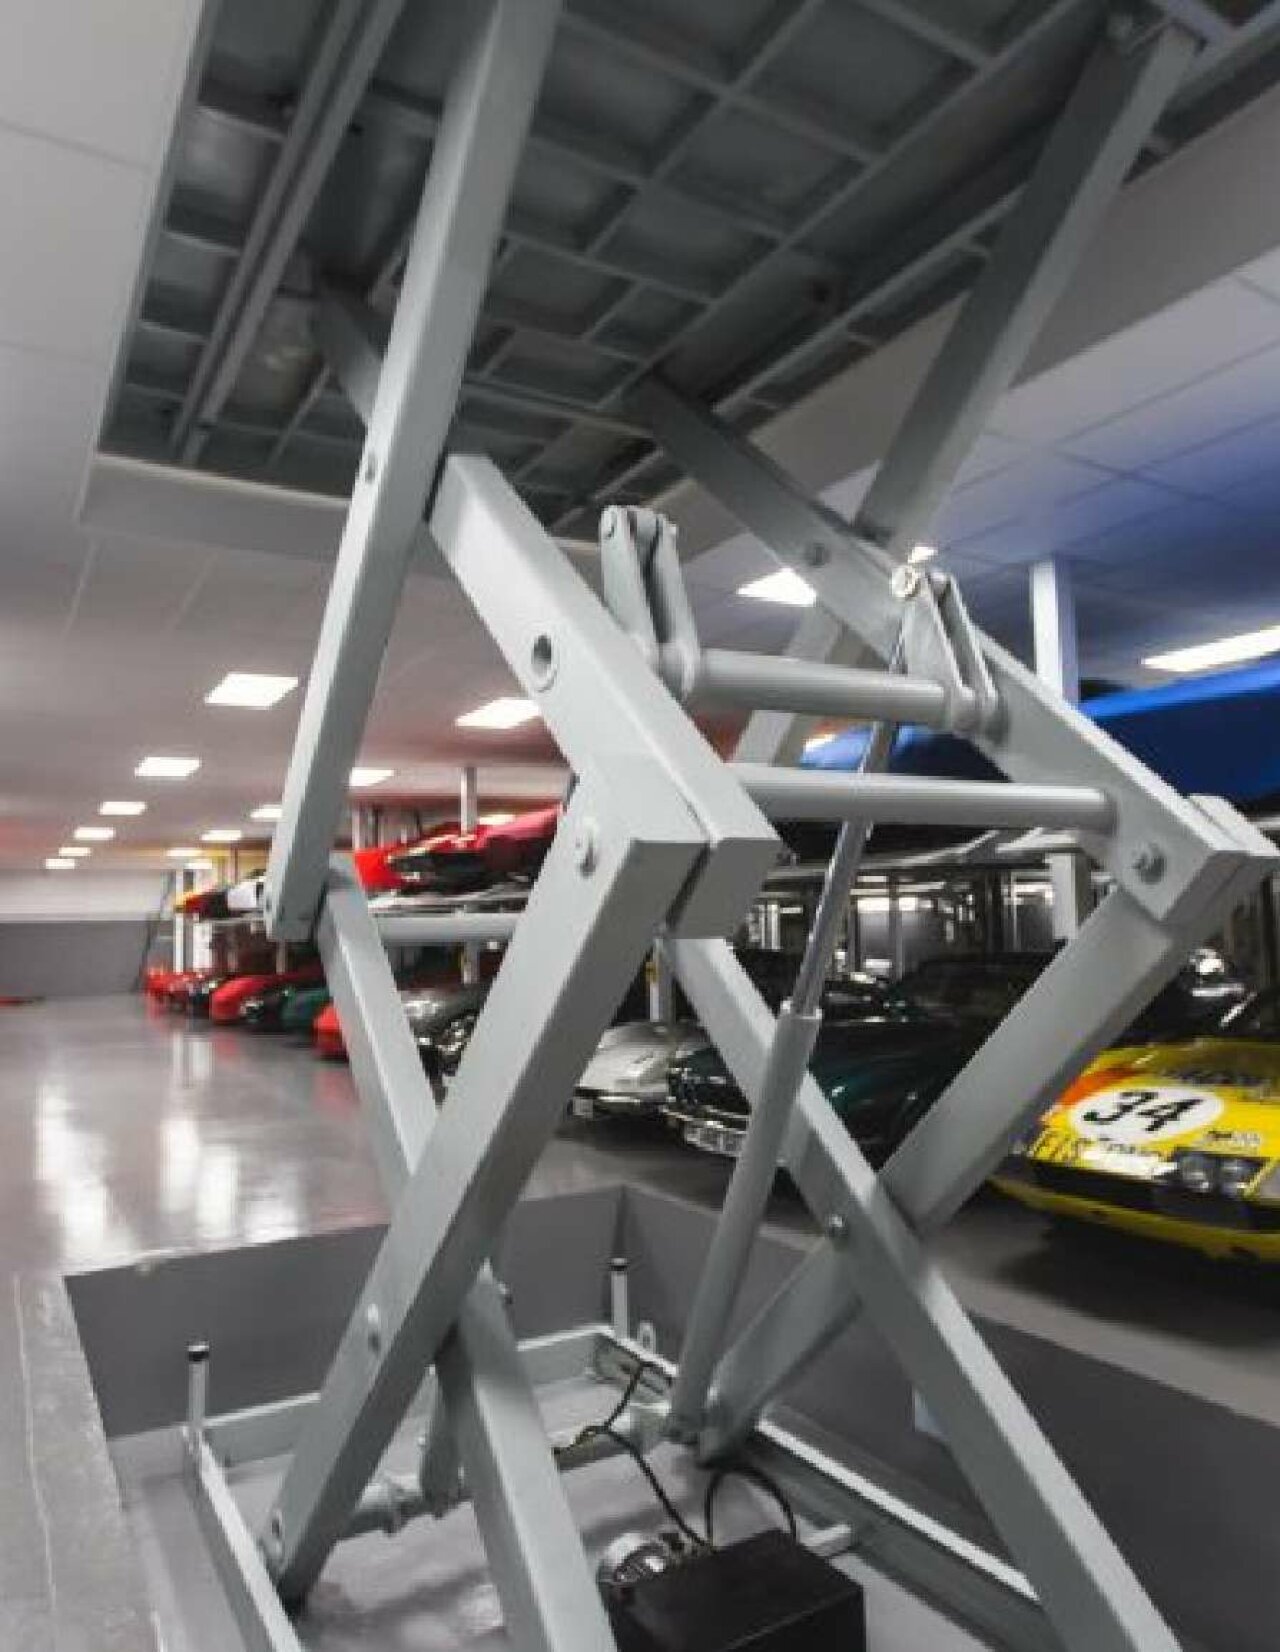 DK Engineering - Automotive mezzanine flooring - Automotive lift close up 2.